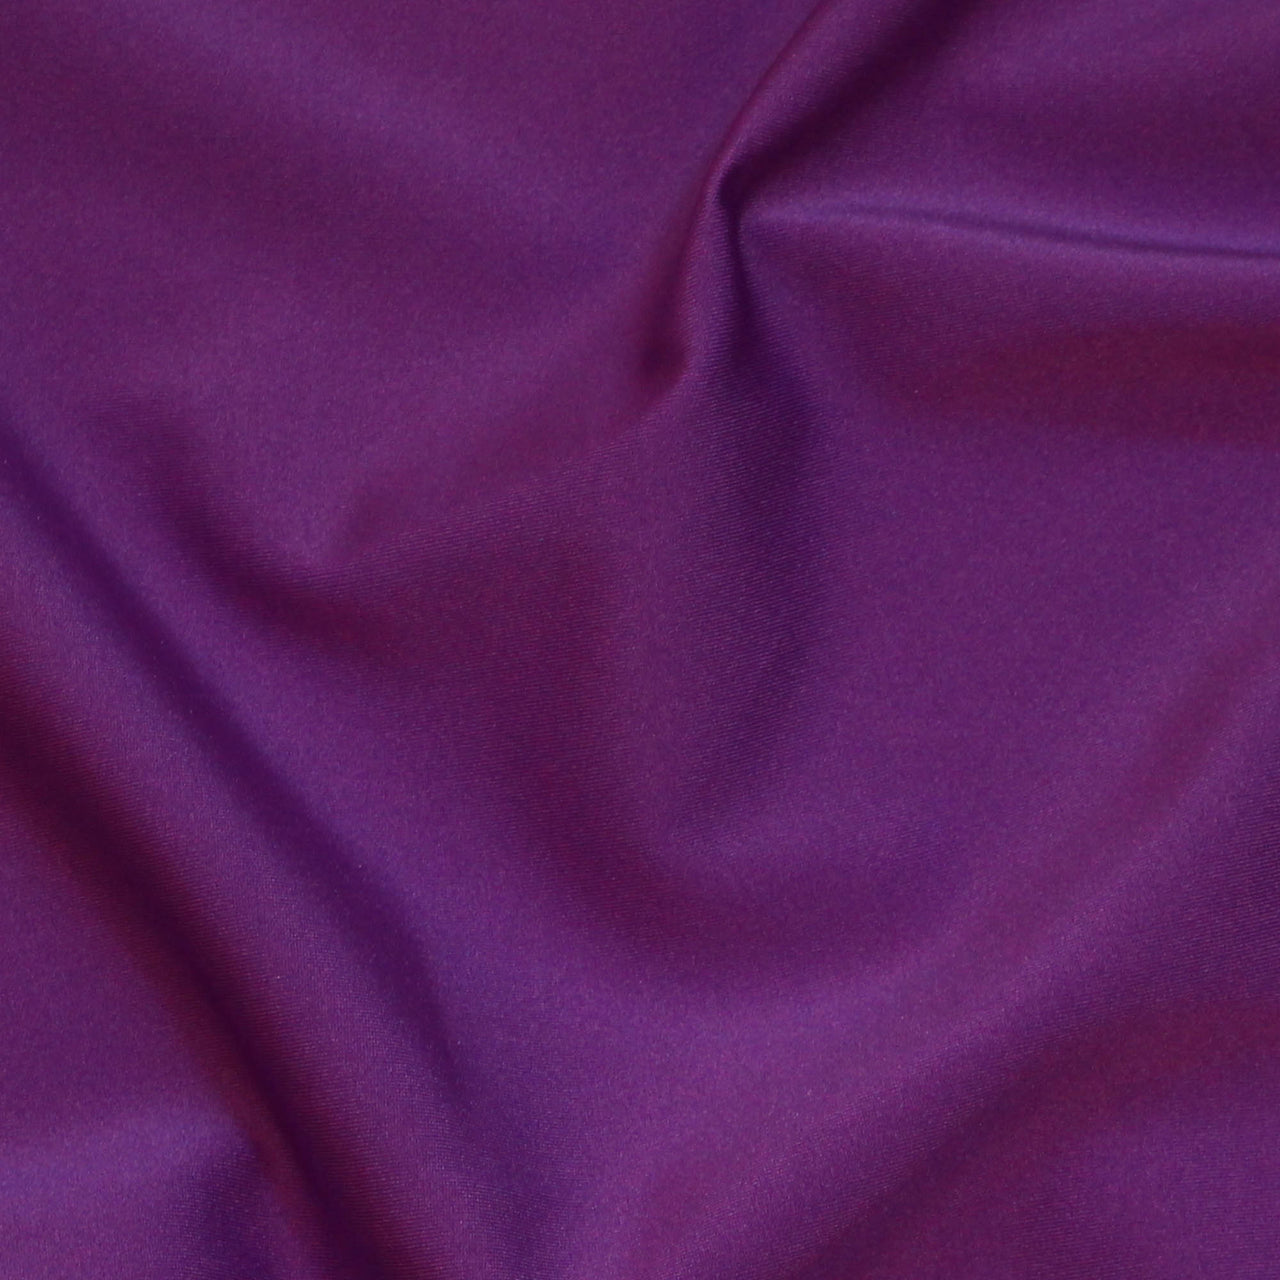 Purple - Nylon Spandex Fabric - 4 Way All Way Stretch Superior Quality - Leotards, Dancewear